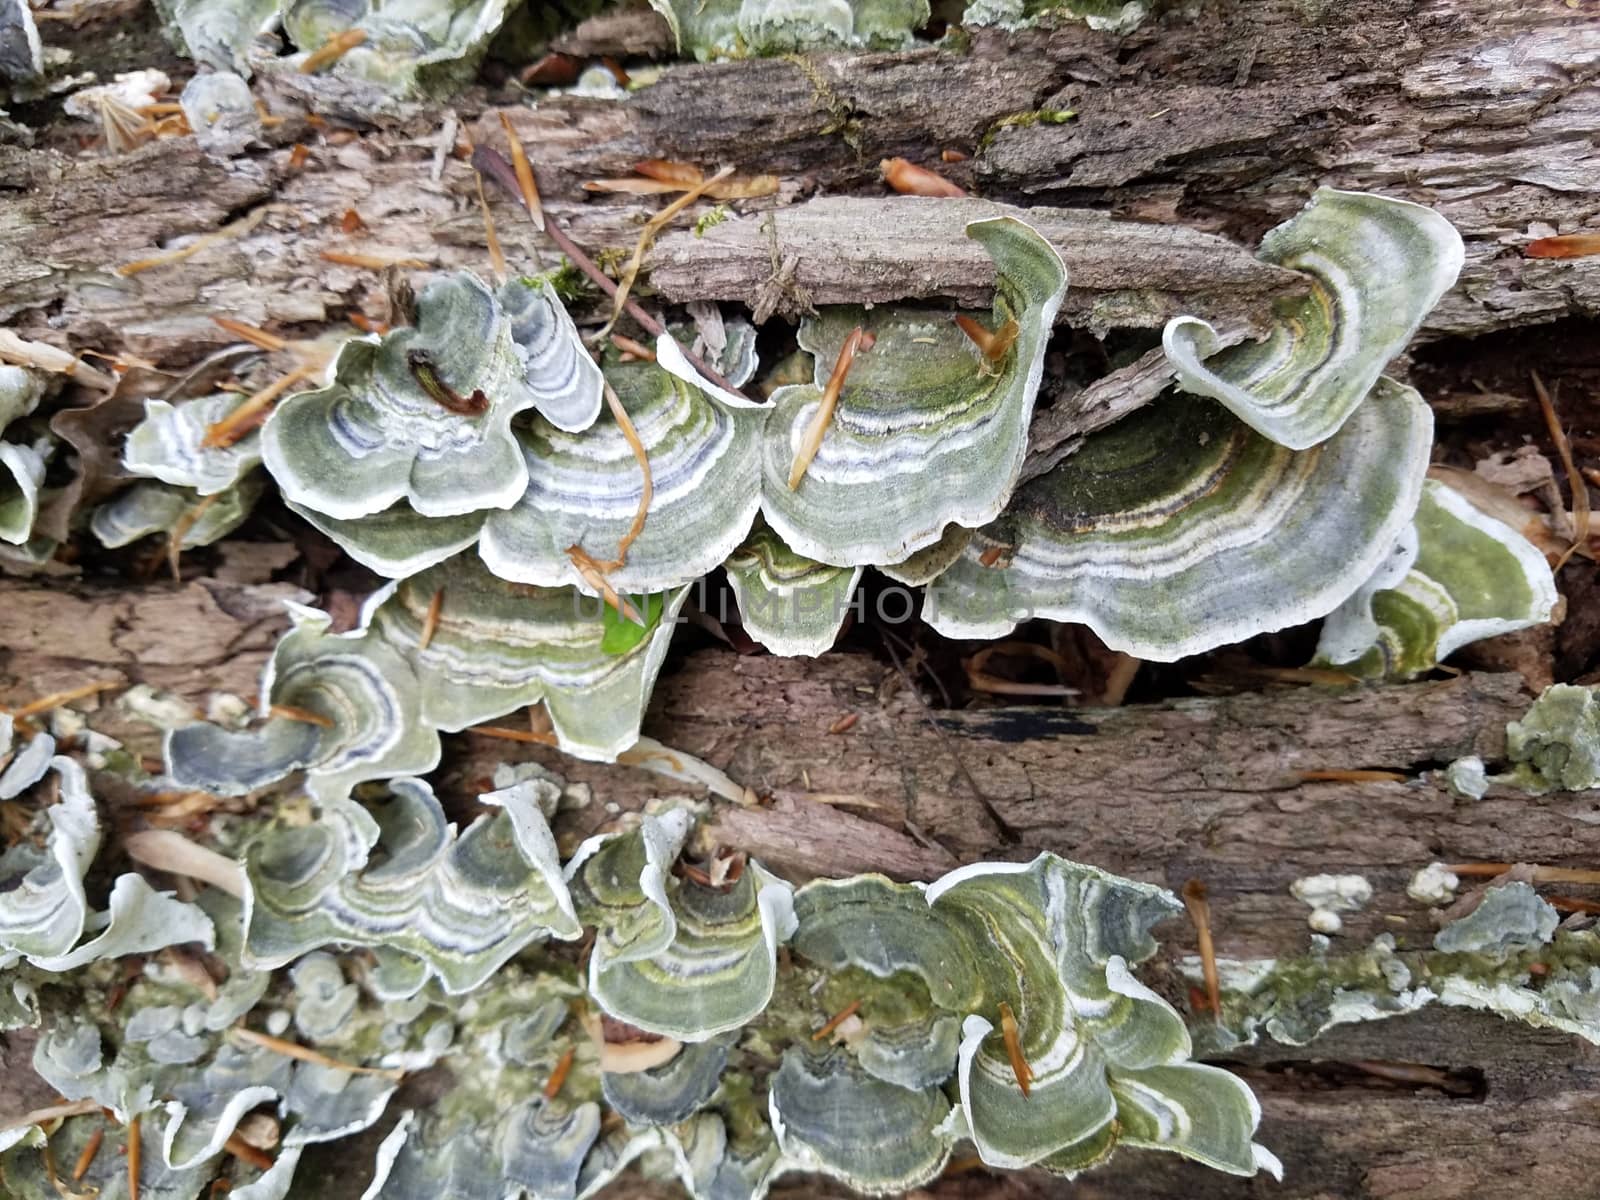 green and grey fungus or mushroom on rotting wood or log